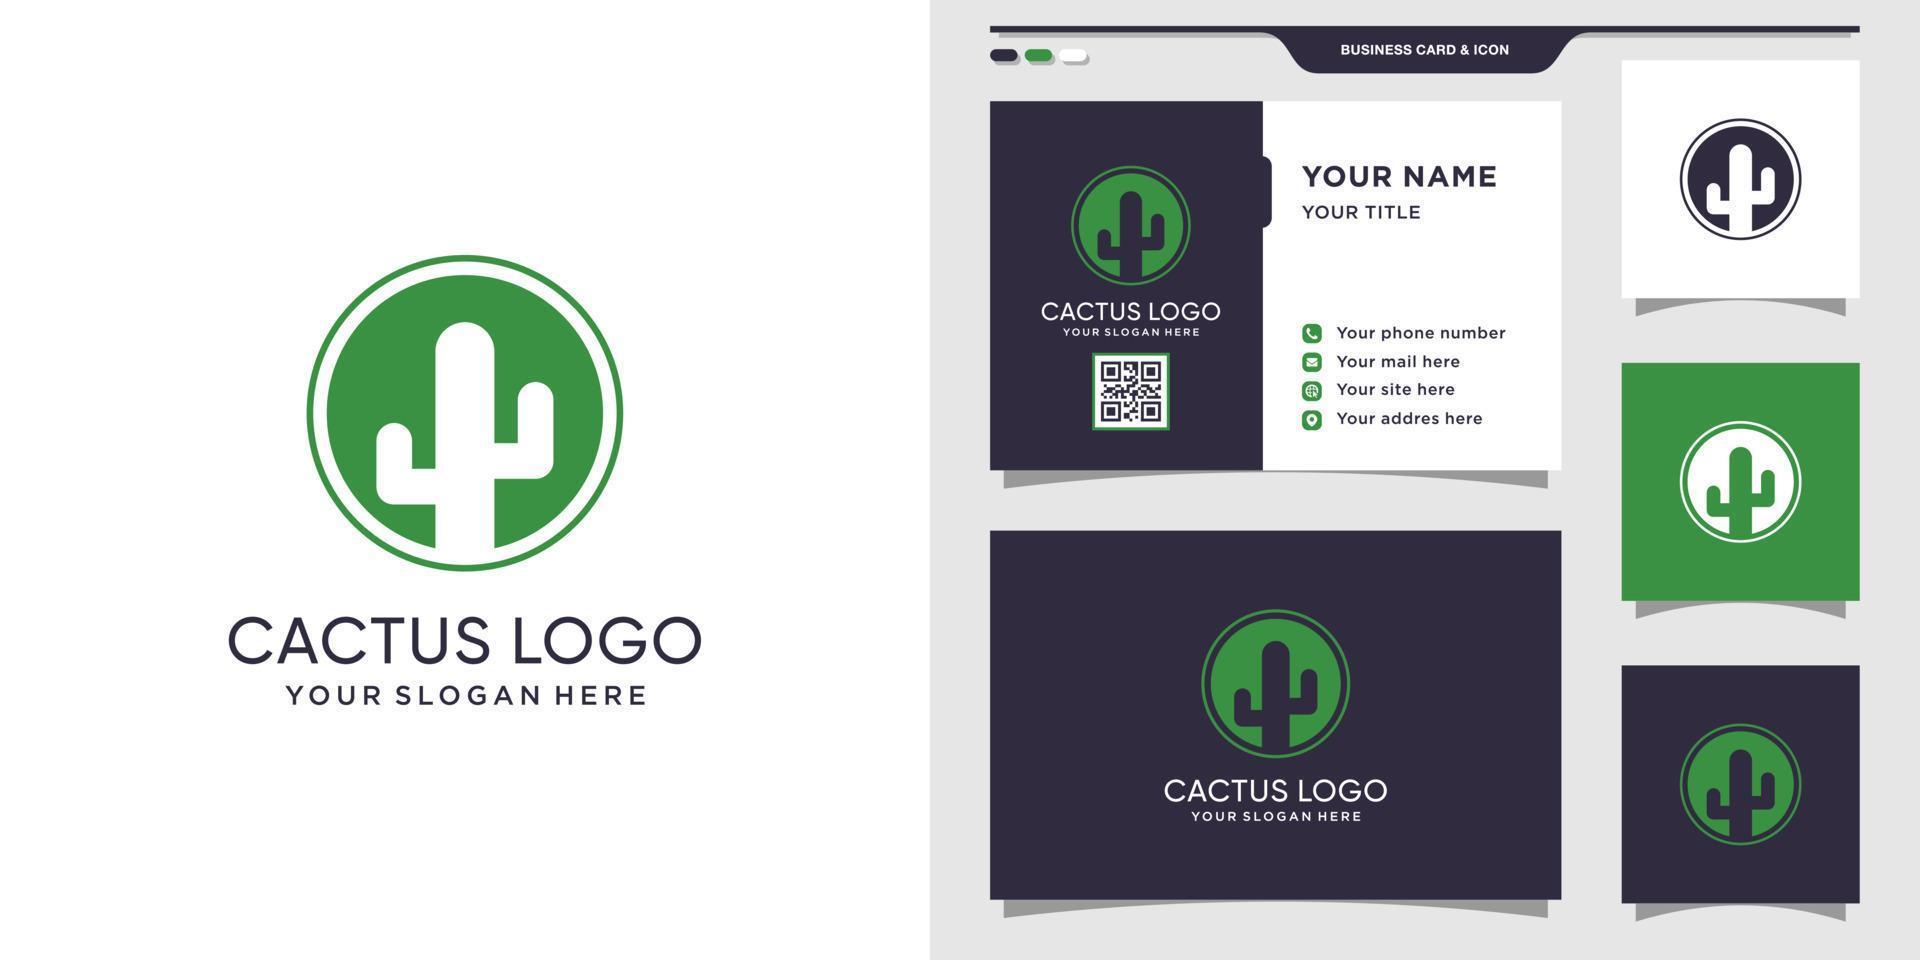 Kaktus-Logo mit Kreiskonzept und Visitenkartendesign. Kaktus-Logo-Design-Vorlage Premium-Vektor vektor